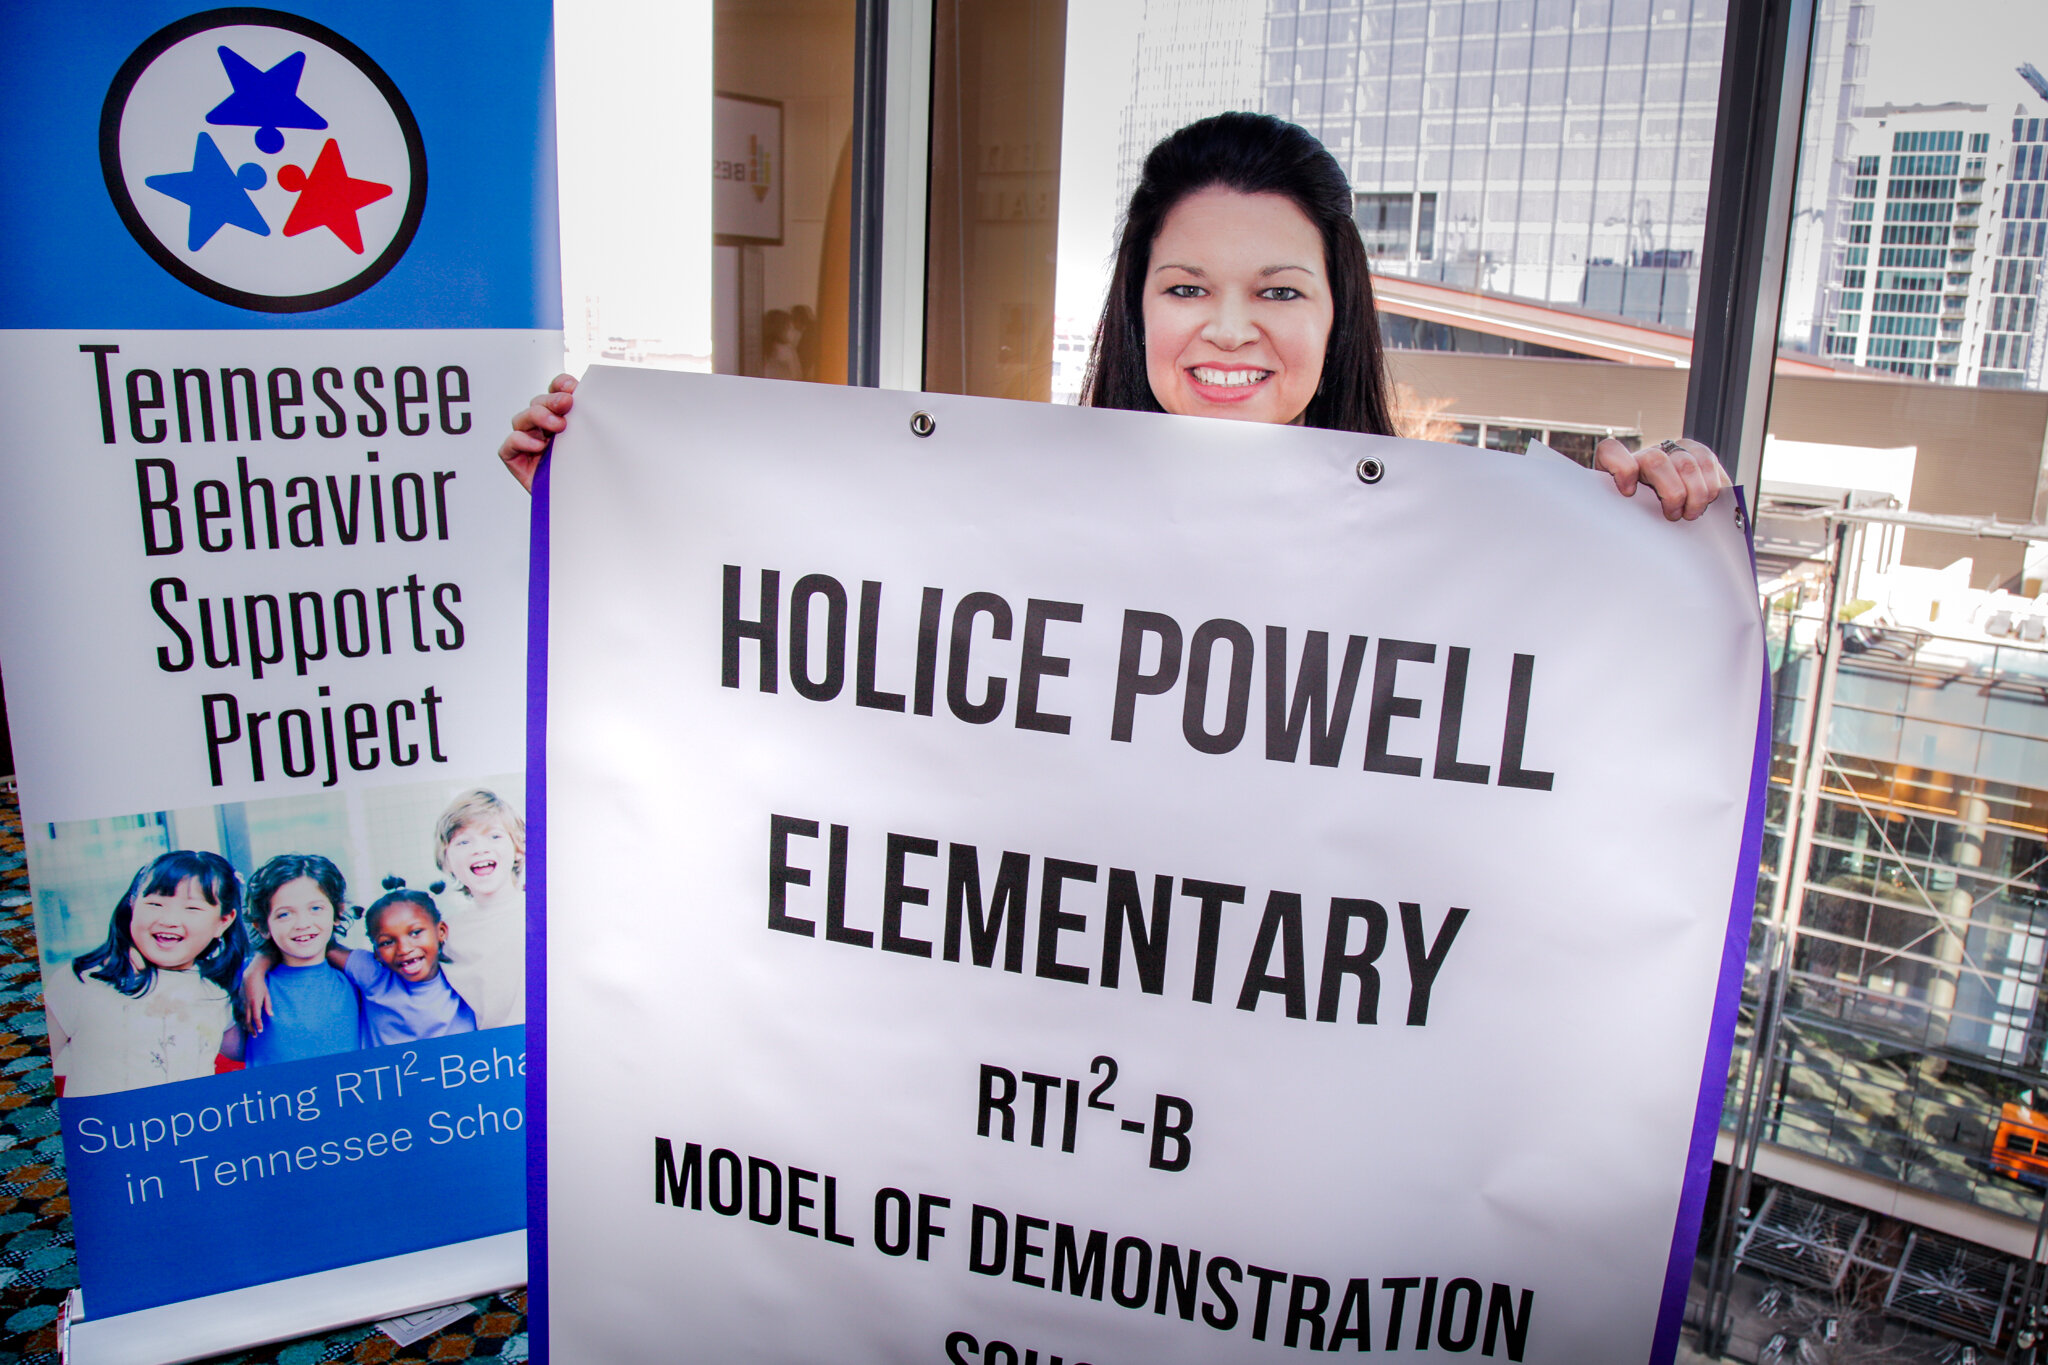 Holice Powell Elementary